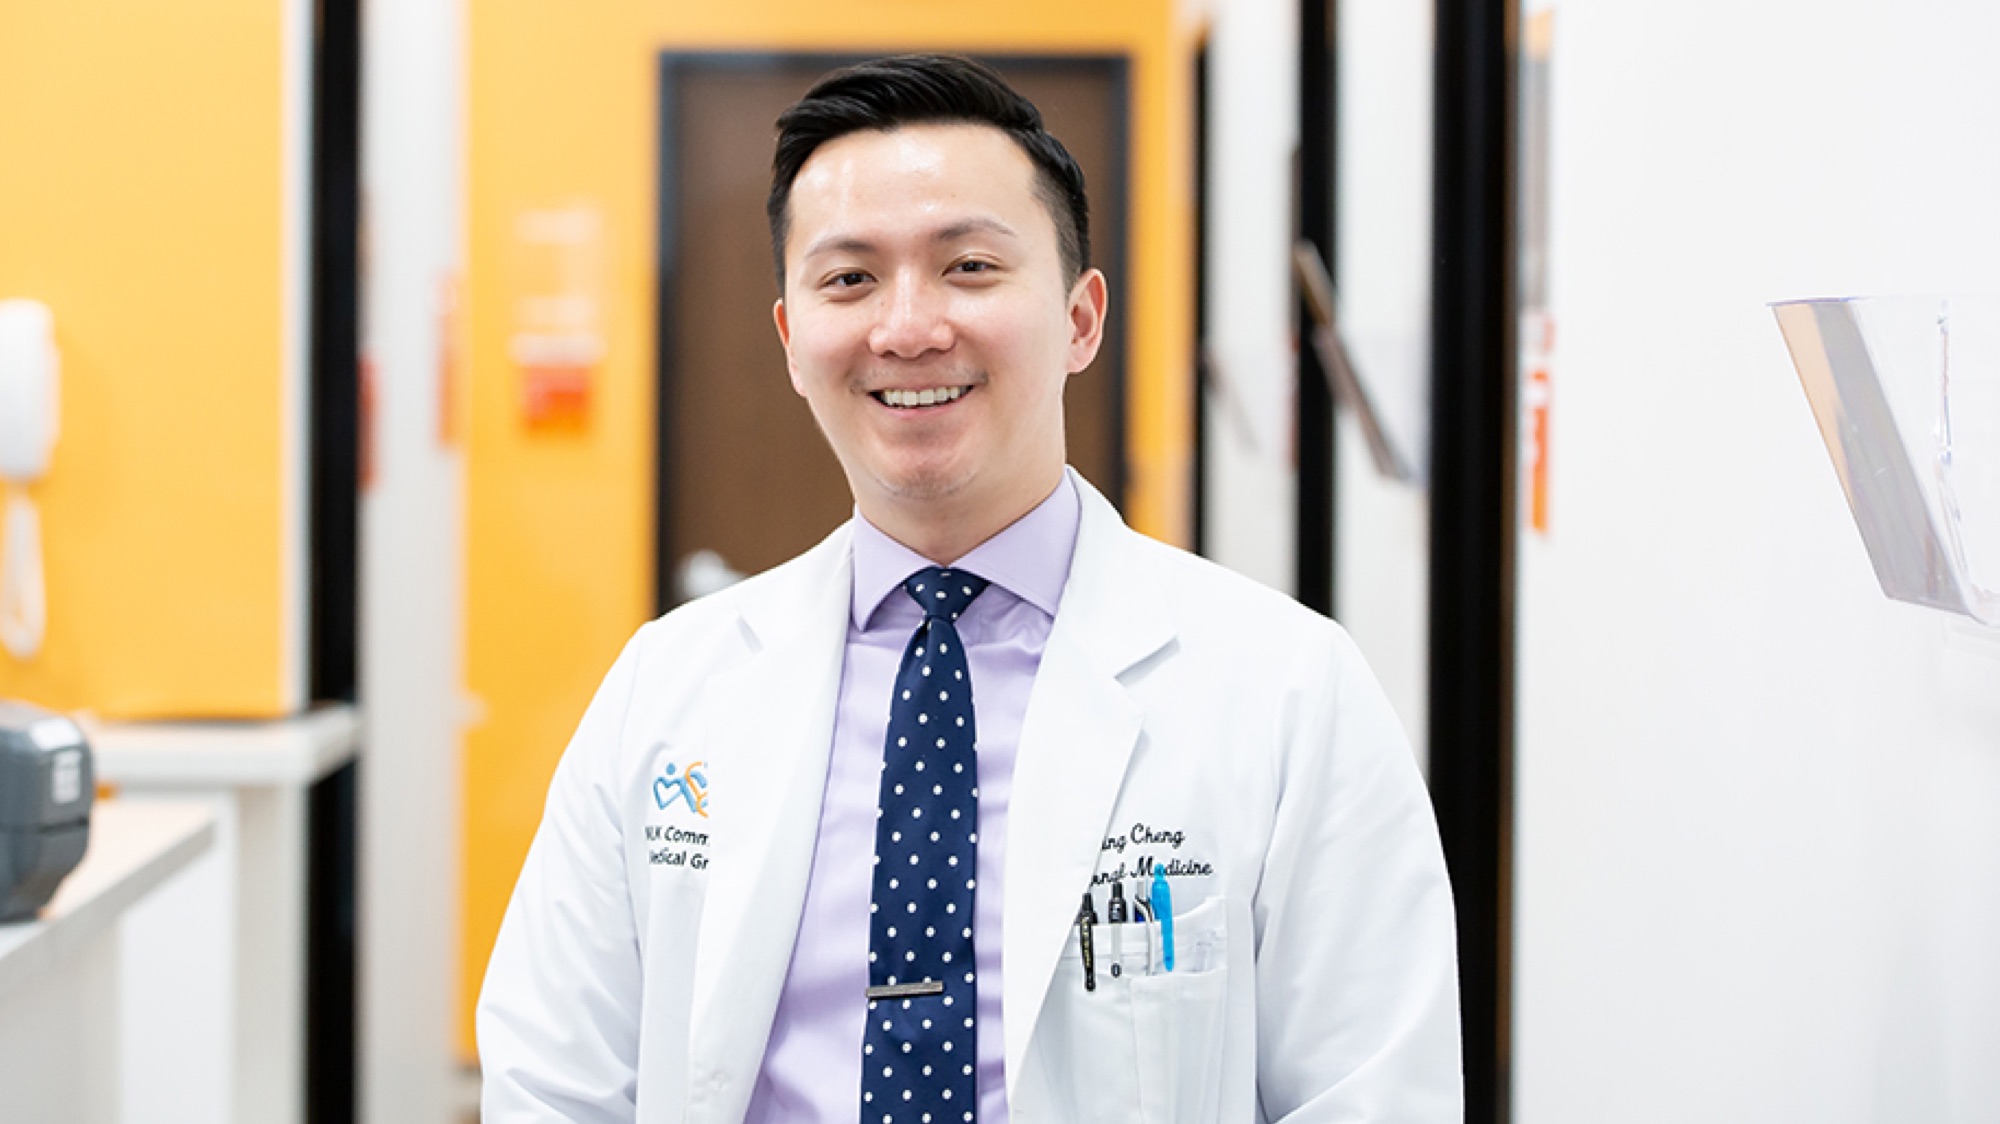 Dr. Ben Cheng